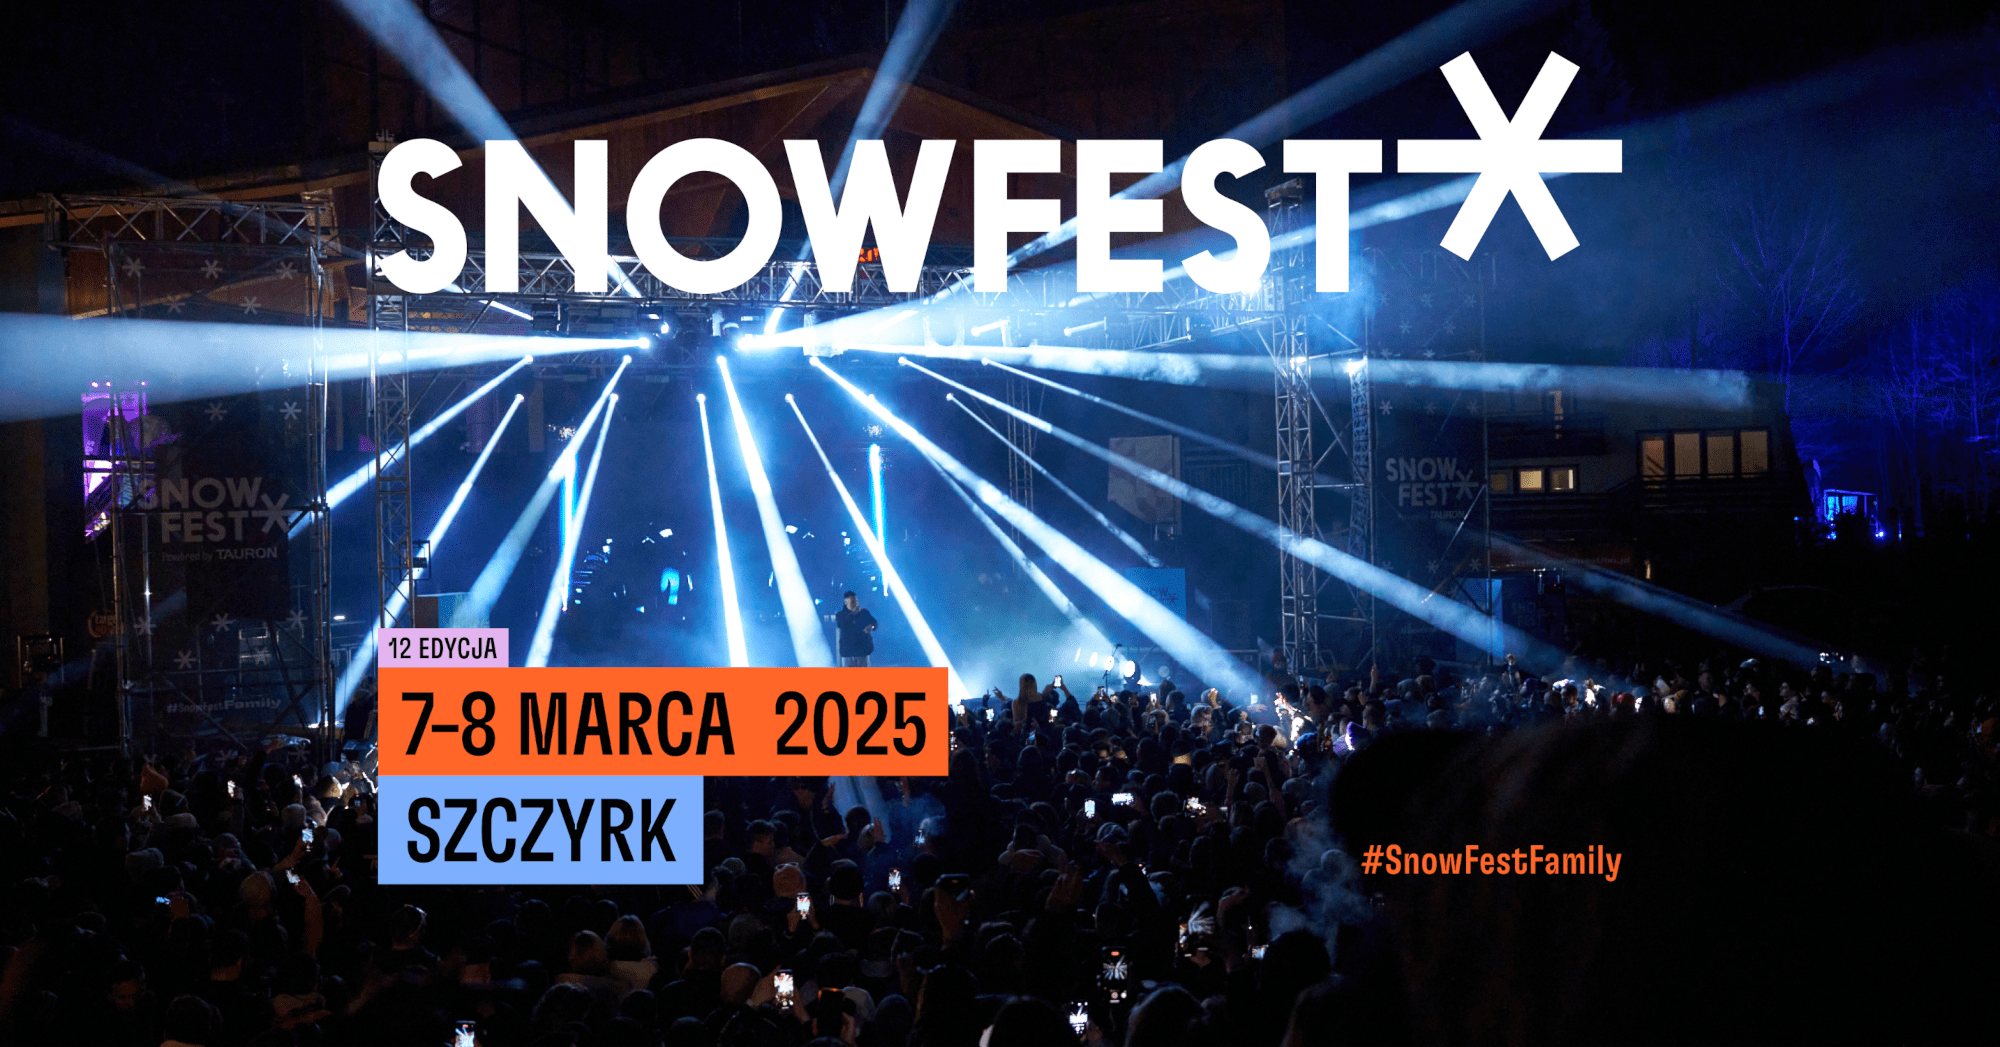 SnowFest Festival 2025